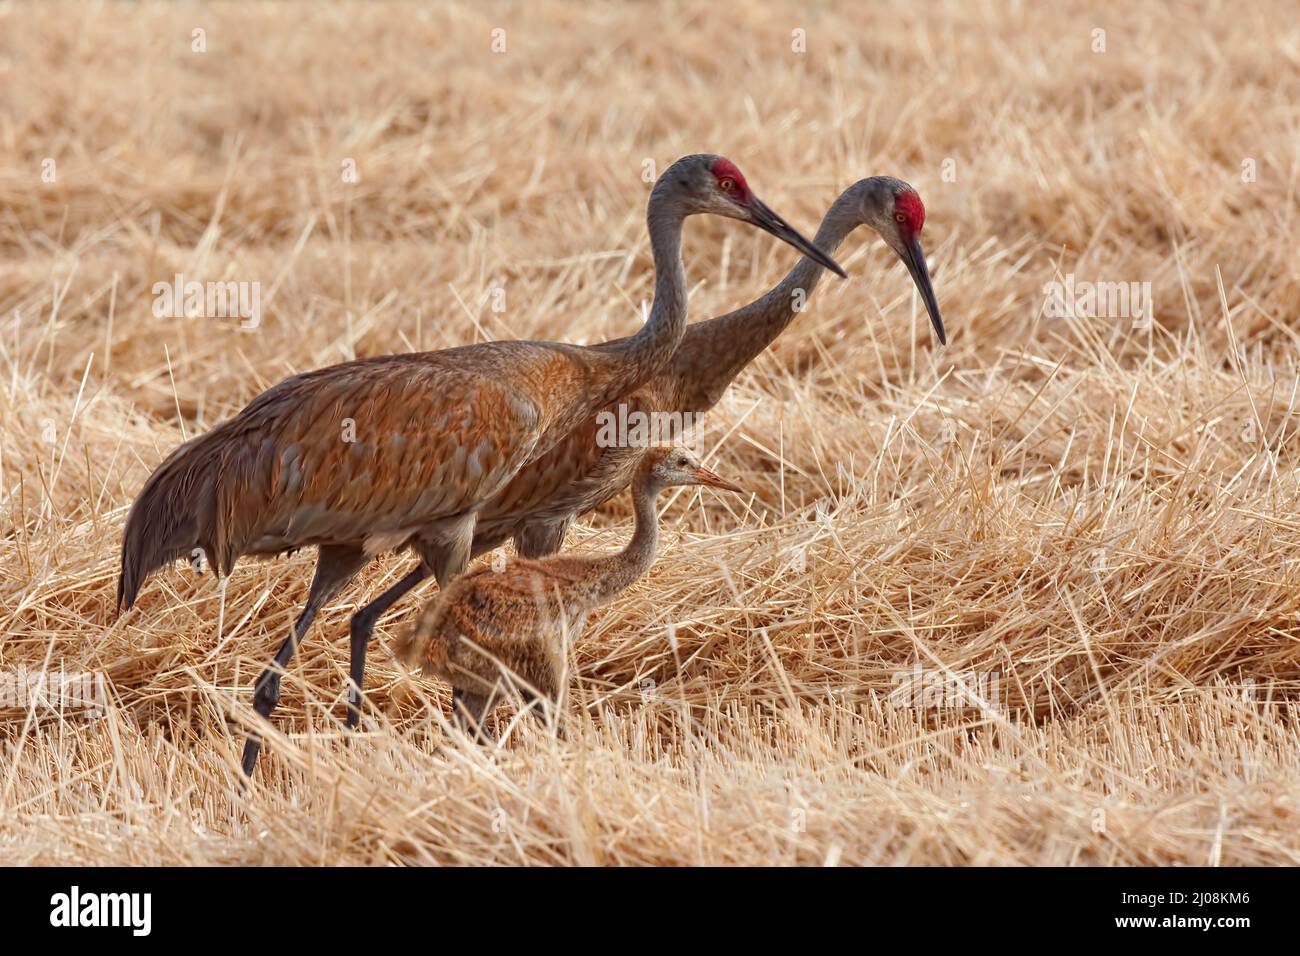 A Sandhill Crane family, Grus canadensis, in field Stock Photo